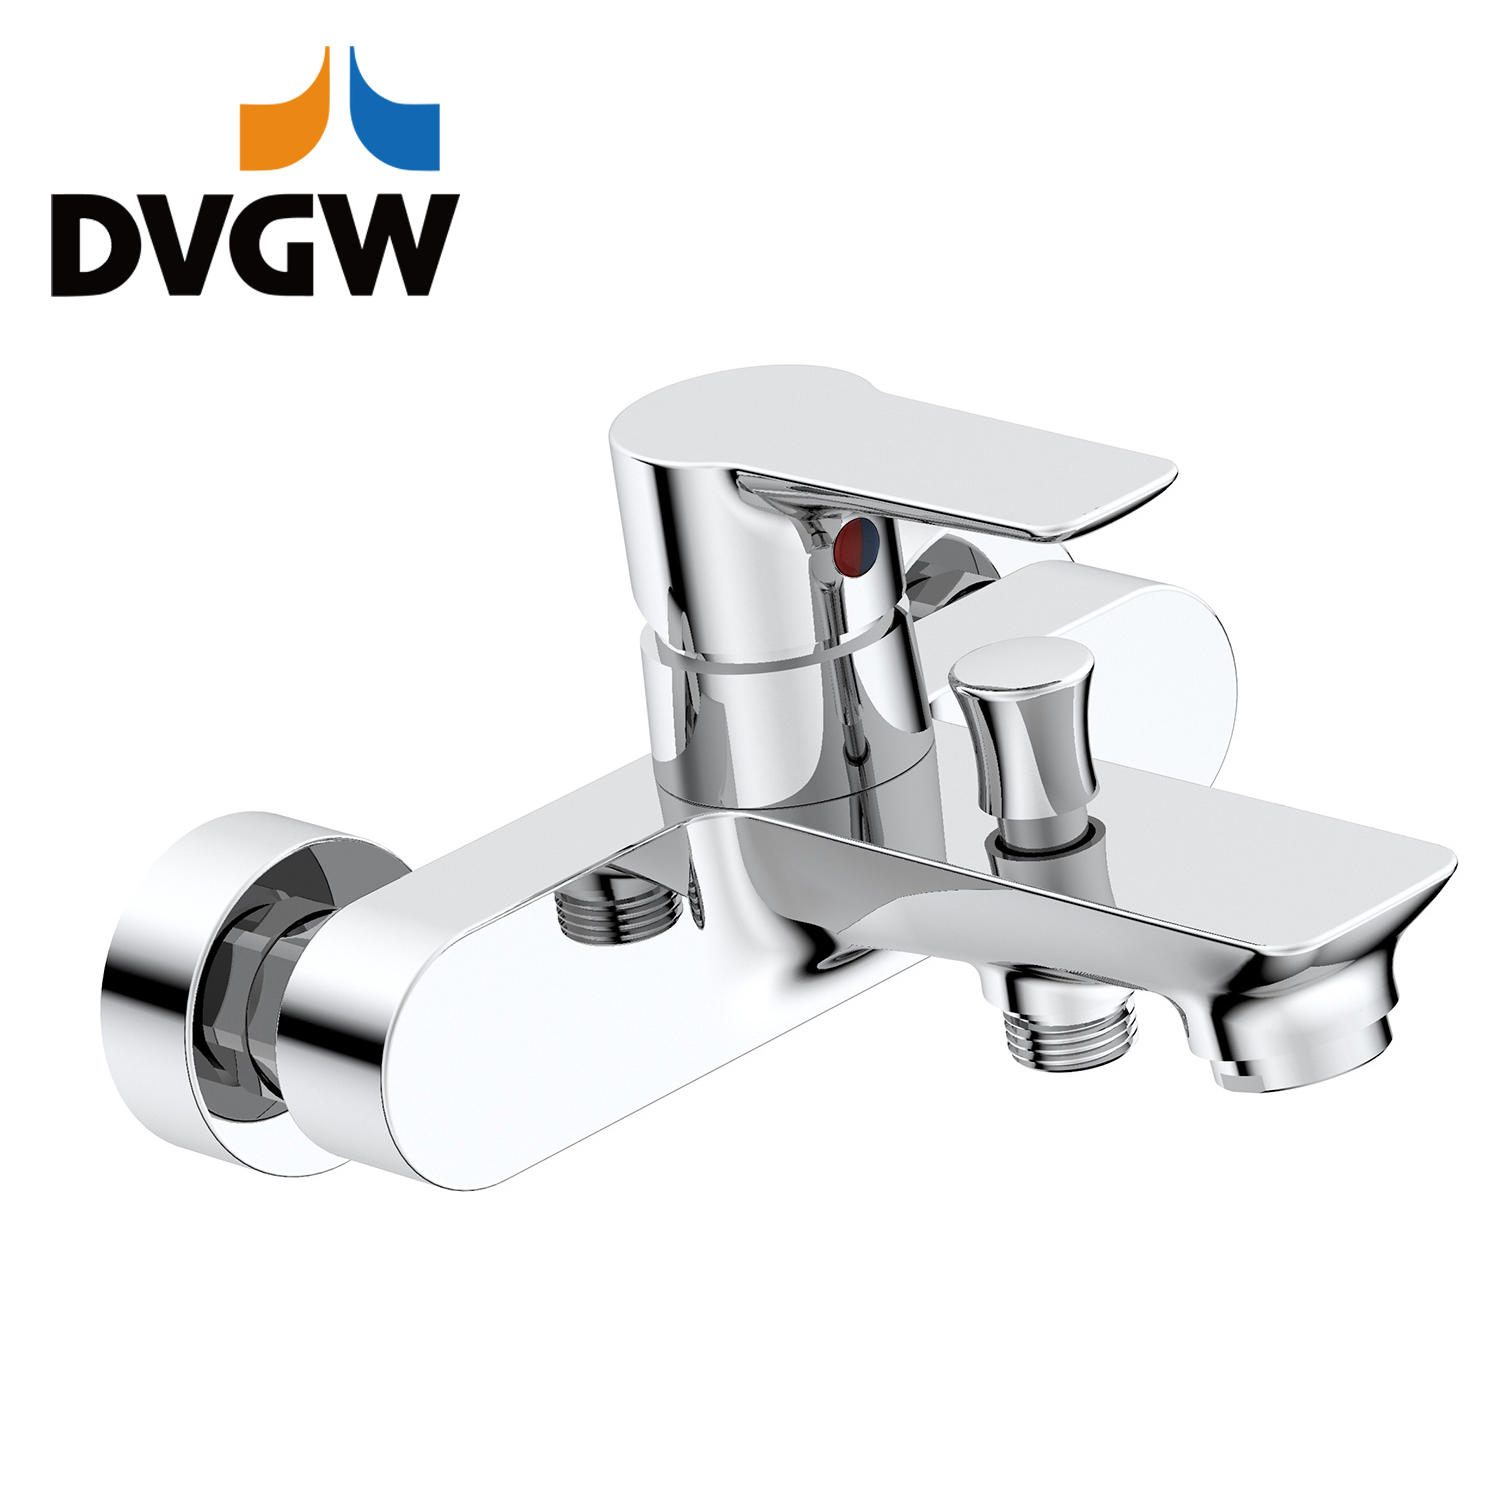 3187-10 diperakui DVGW, paip loyang tuil tunggal pengadun tab mandi air panas/sejuk yang dipasang di dinding